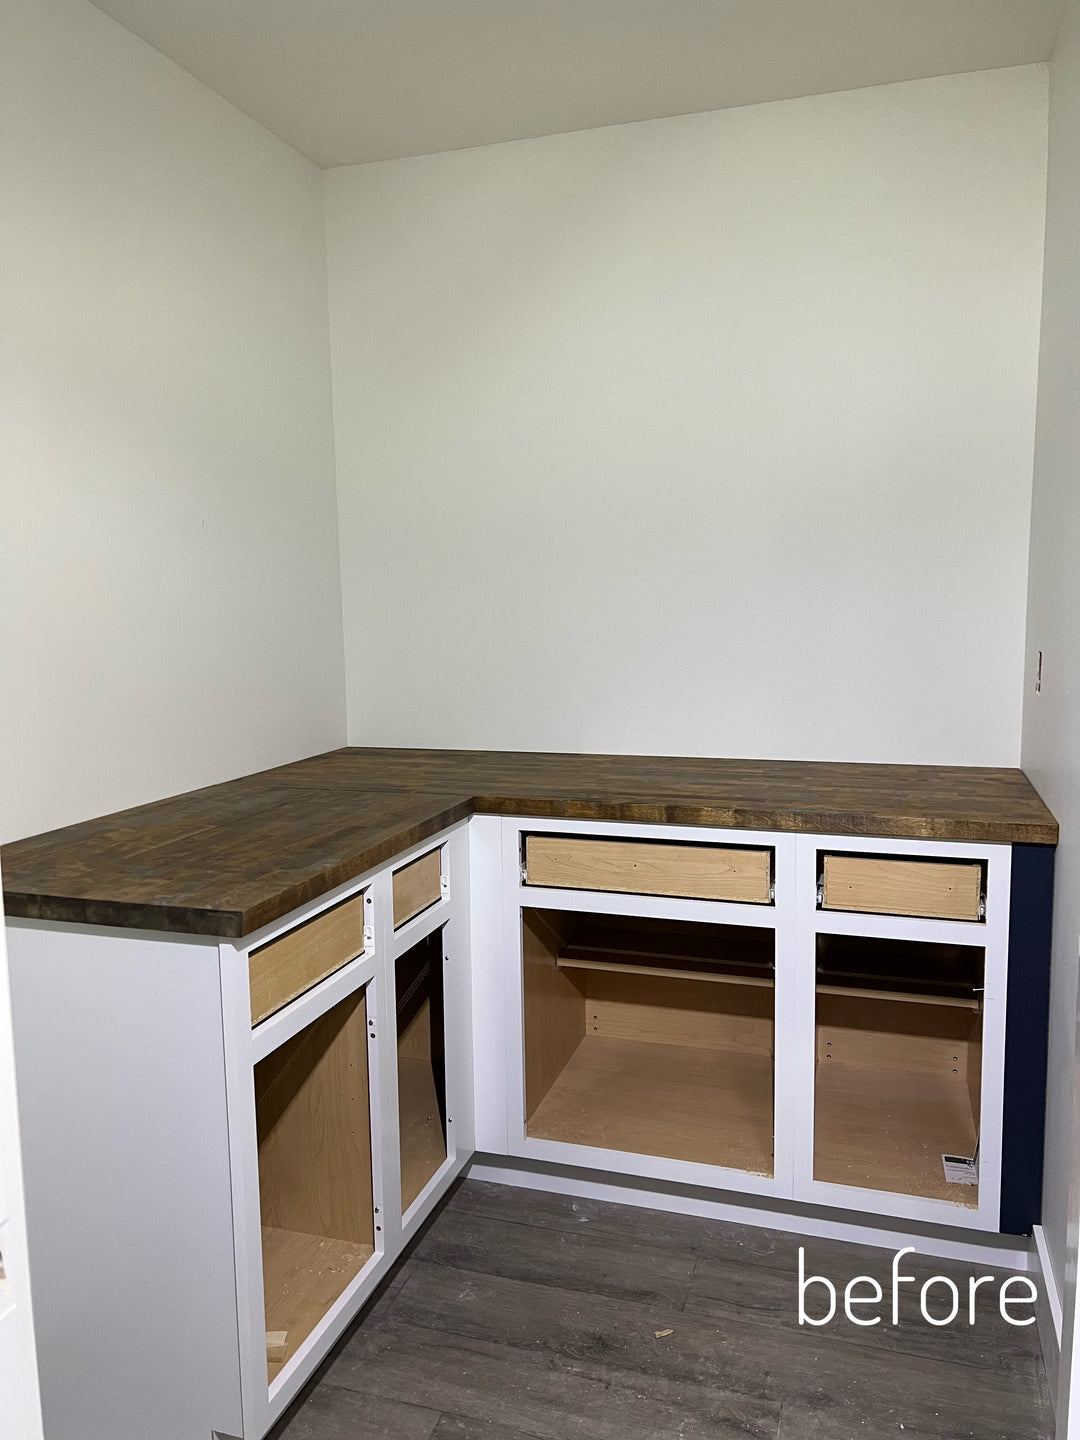 Kitchen & Cabinet Refinishing - The Loft/ 36 Eleven